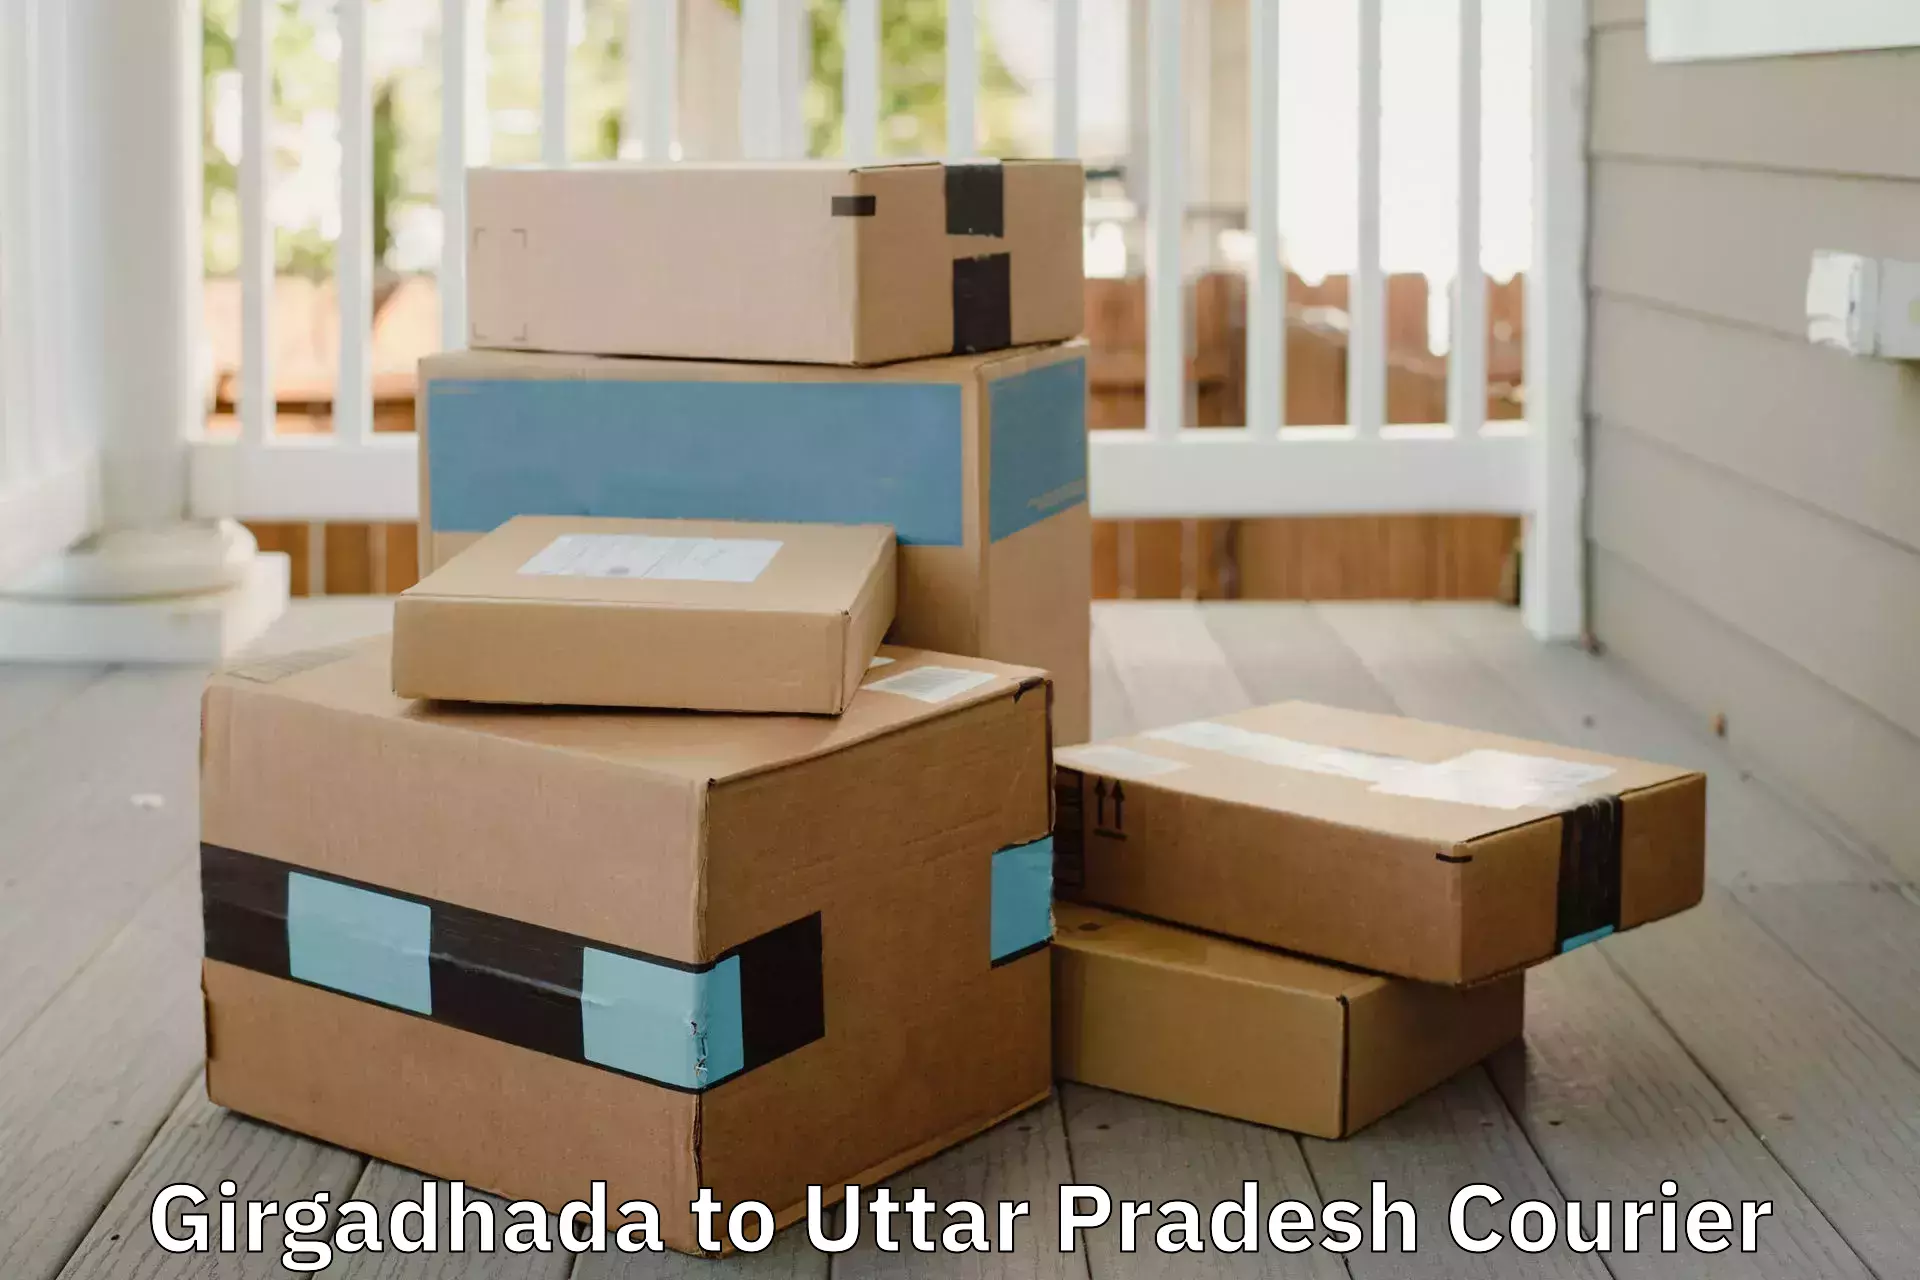 Reliable household moving Girgadhada to Ambedkar Nagar